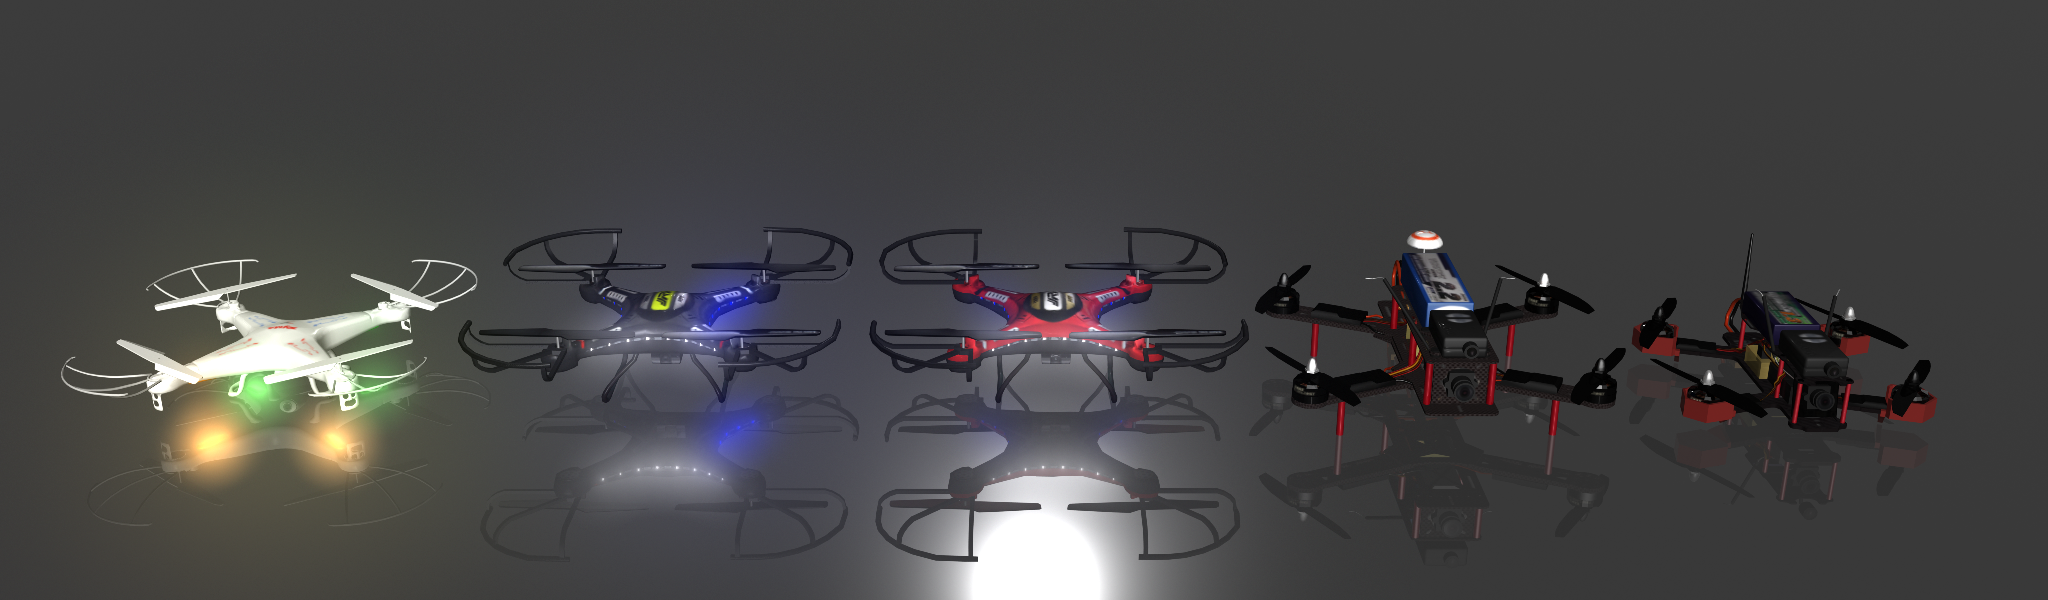 Gépek rendelreve, balról jobbra: JJRC H5C, JJRC H8C, JJRC H8D, Emax Nighthawk 250, Emax Nighthawk 200